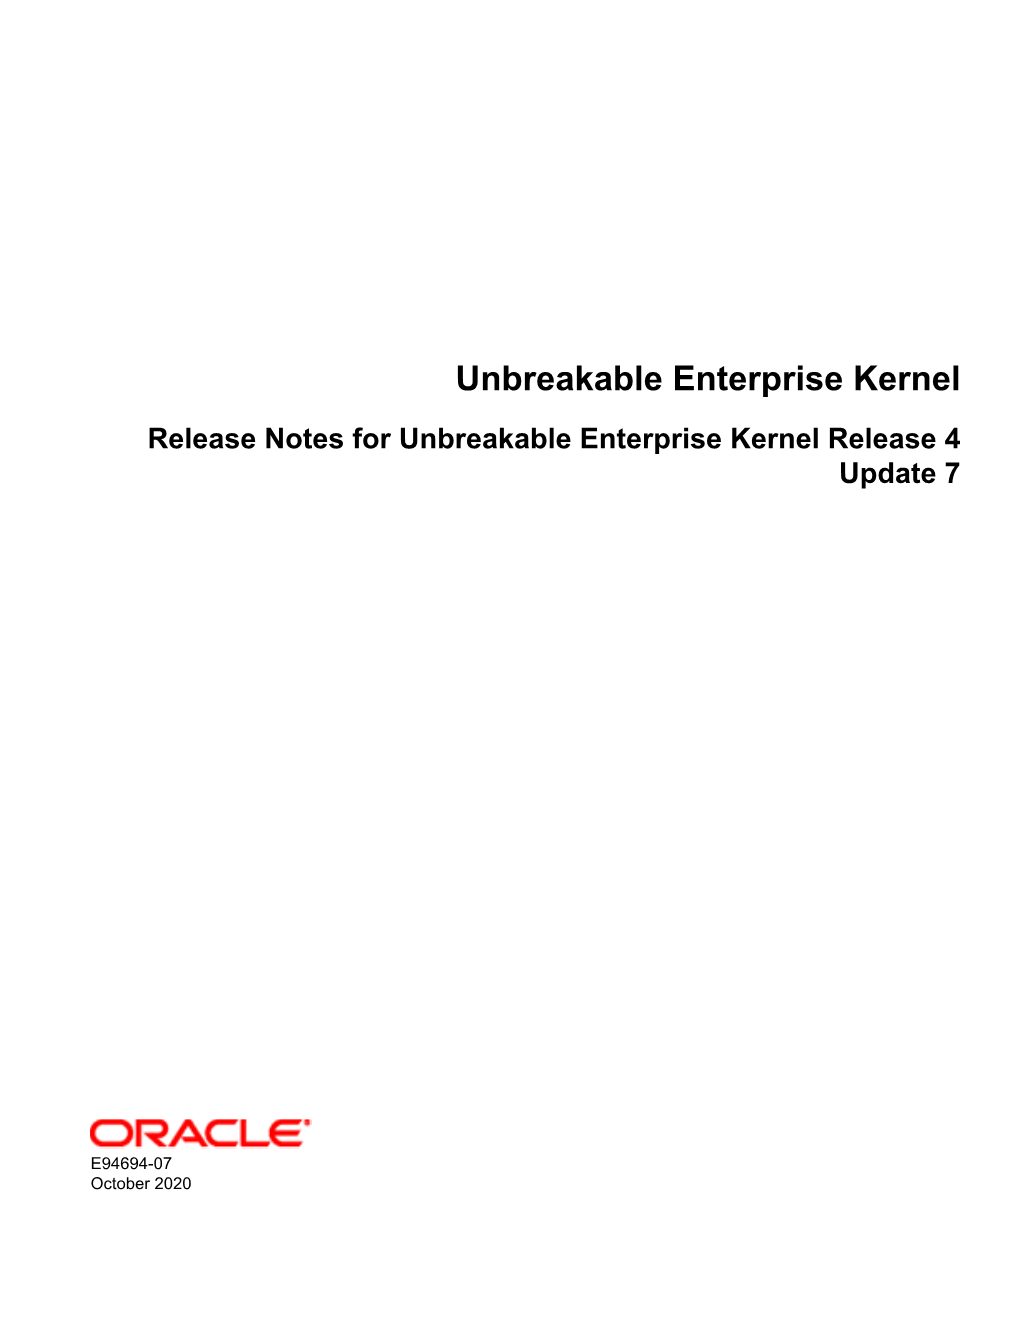 Unbreakable Enterprise Kernel Release Notes for Unbreakable Enterprise Kernel Release 4 Update 7